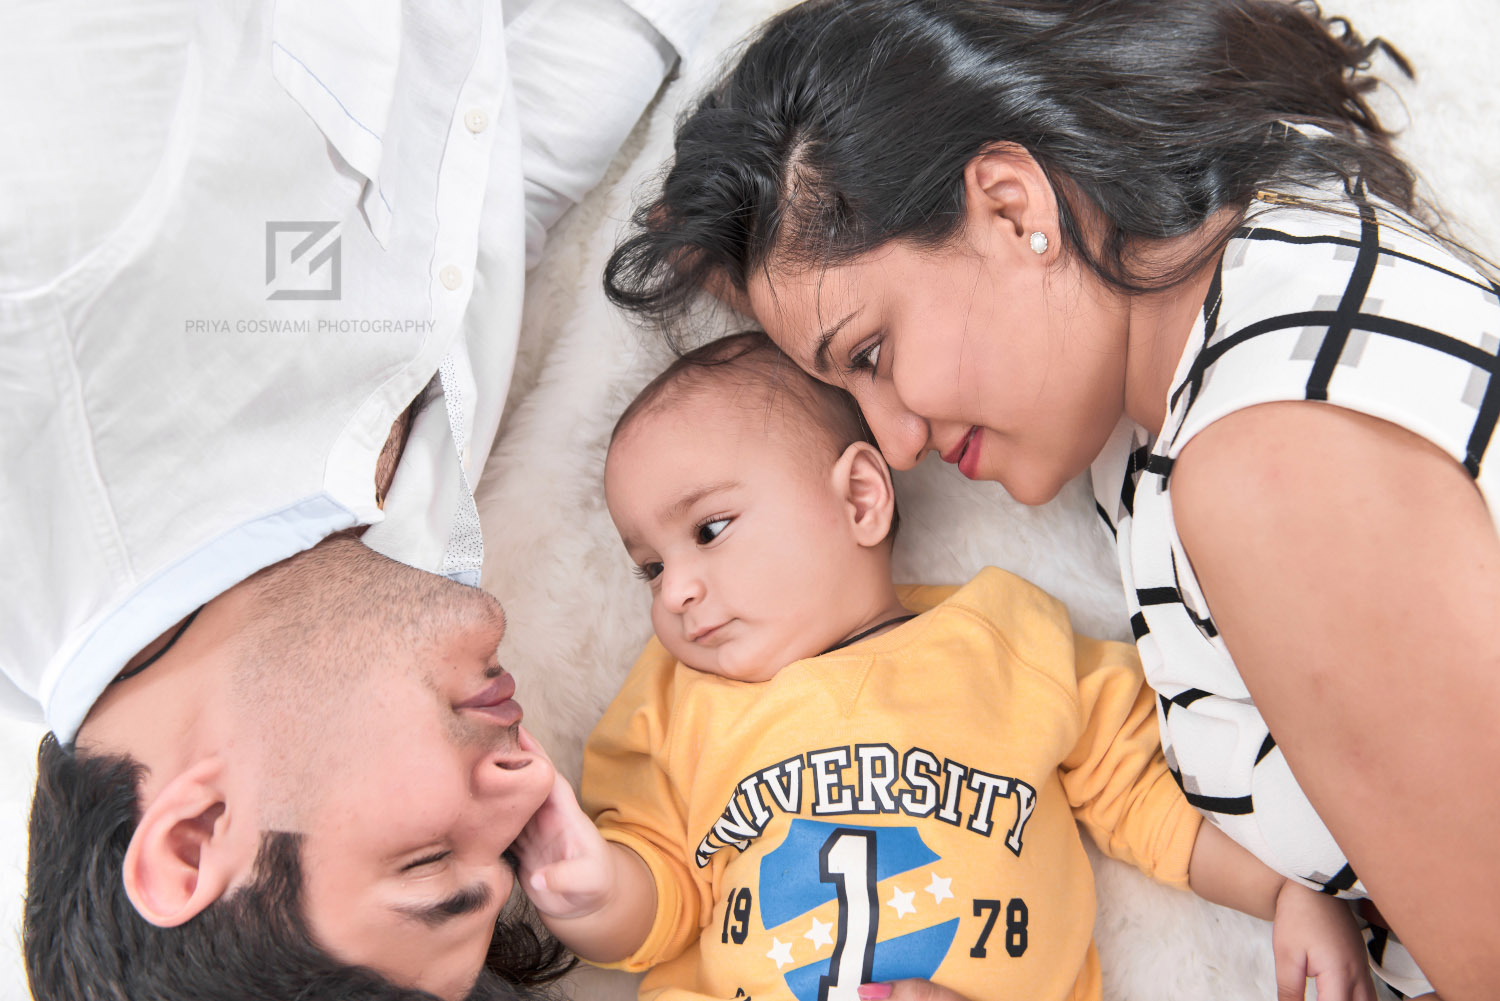 Unique Family Portrait Photoshoot Ideas You're Going to Love